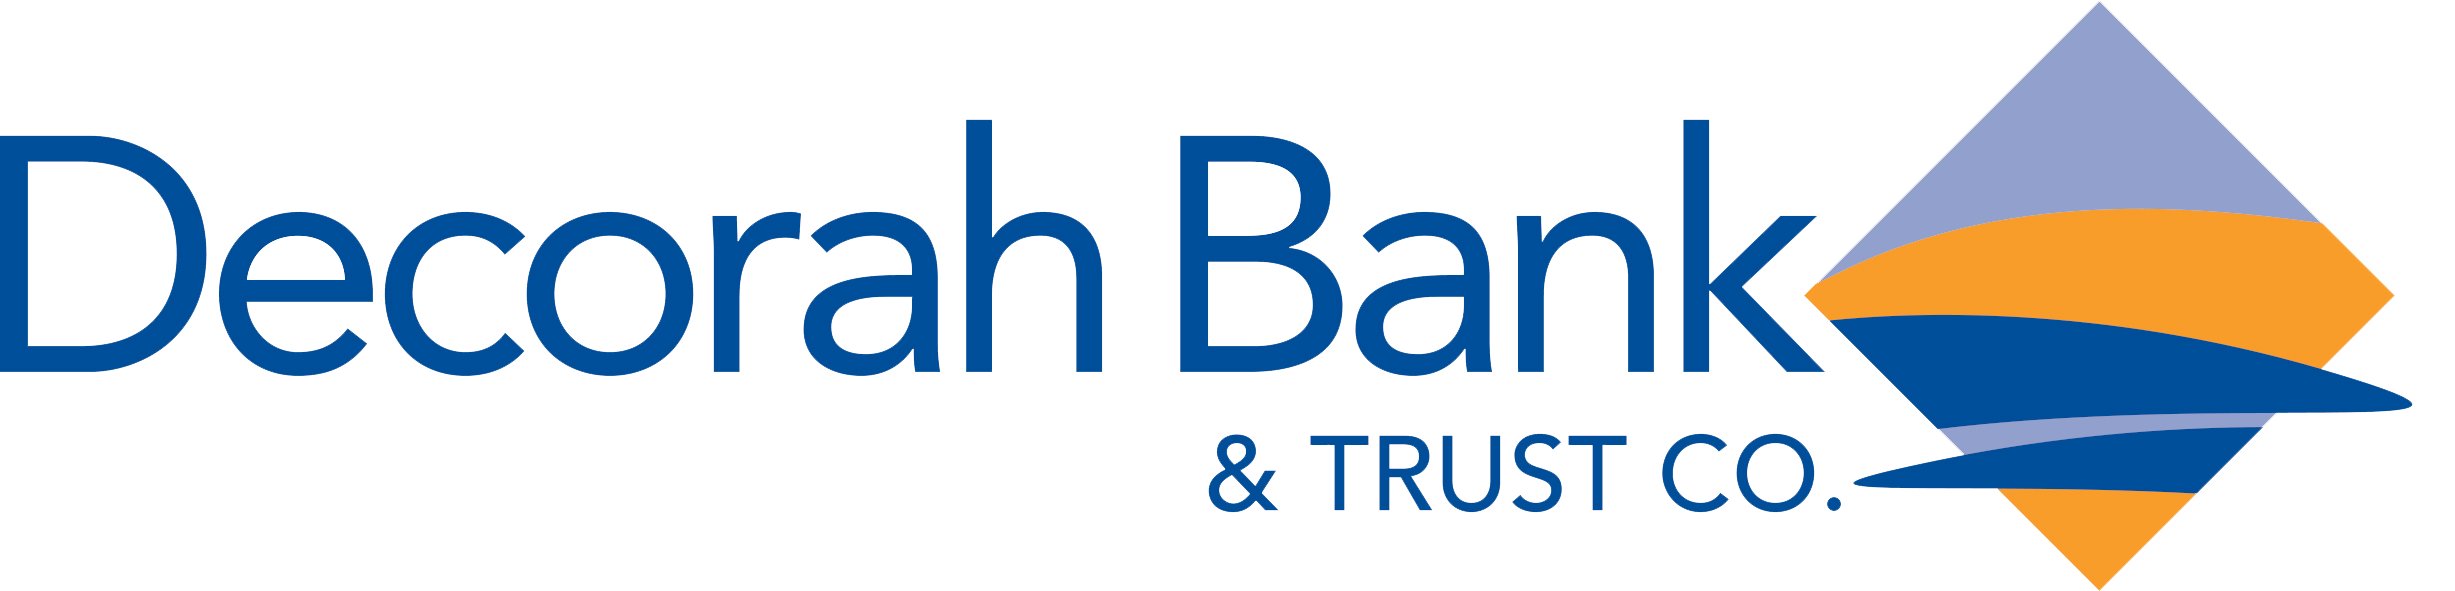 Decorah Bank & Trust Co